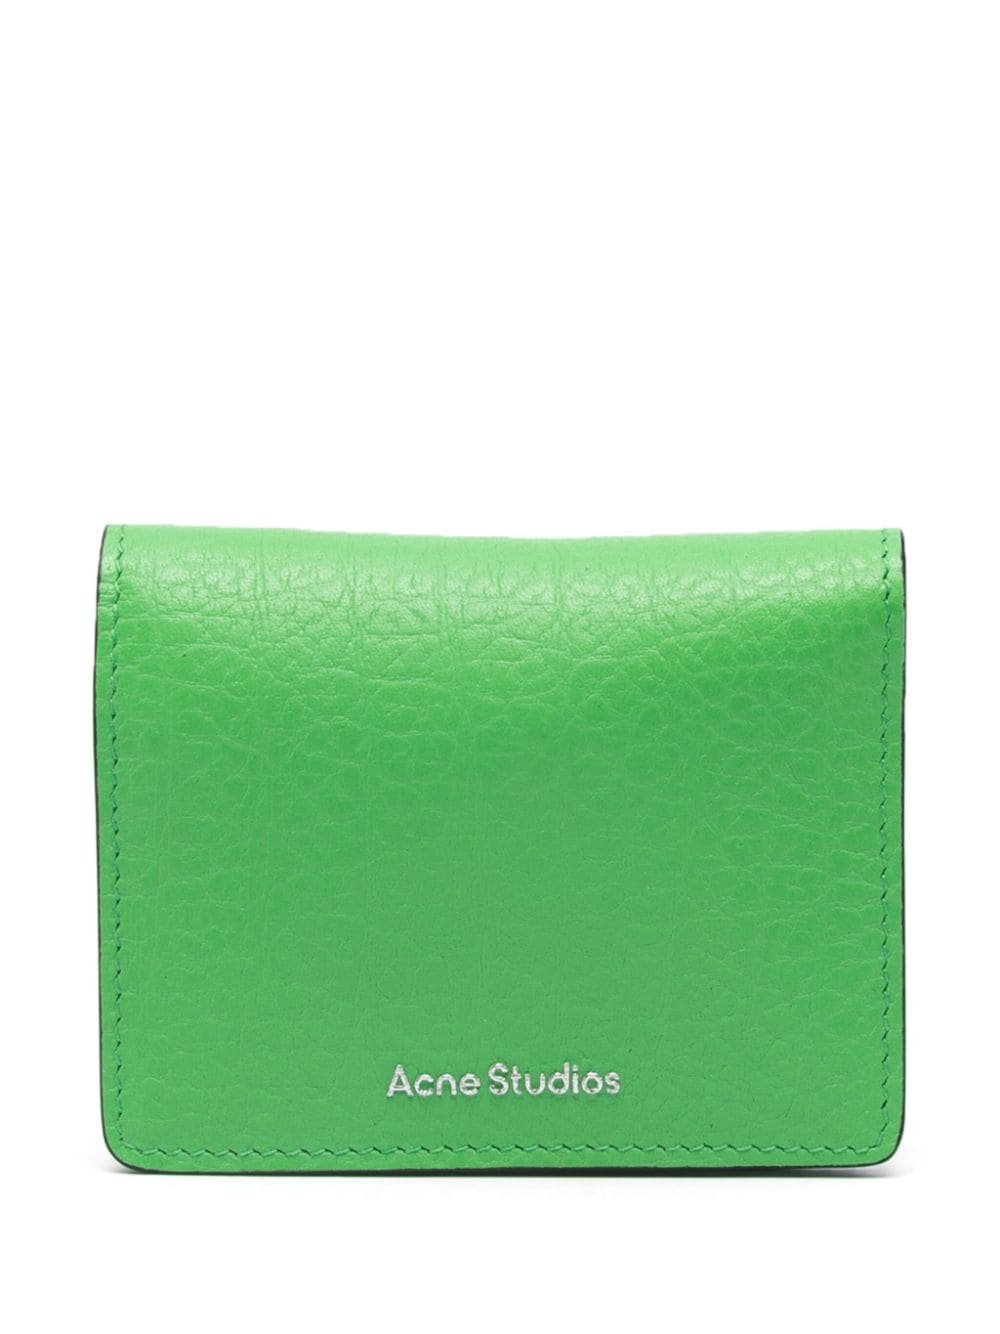 Acne Studios folded leather wallet - Green von Acne Studios